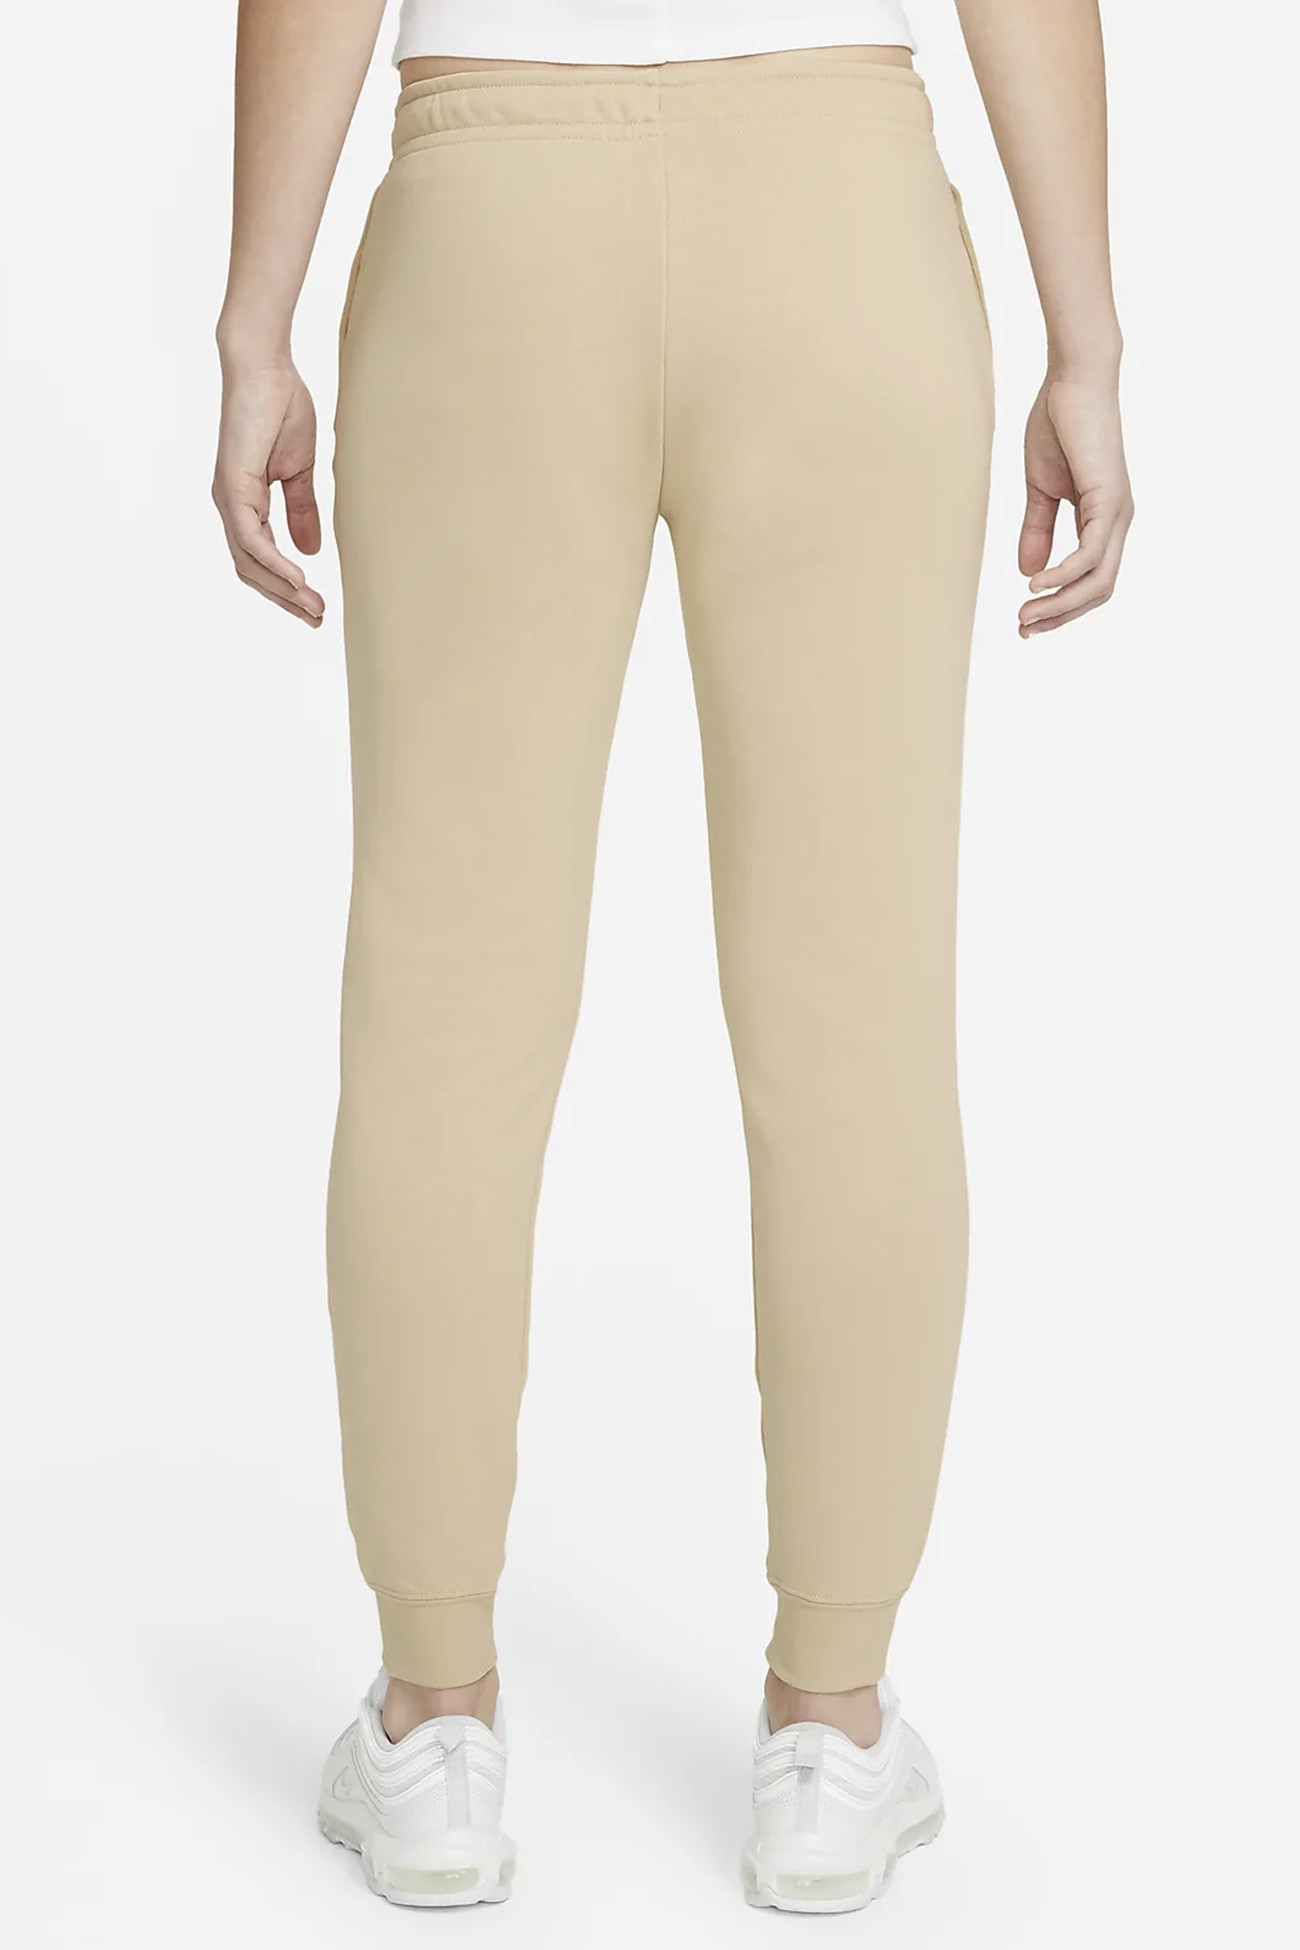 Брюки женские Nike Sportswear Essential Women's Fleece Pants бежевые BV4095-206 изображение 3